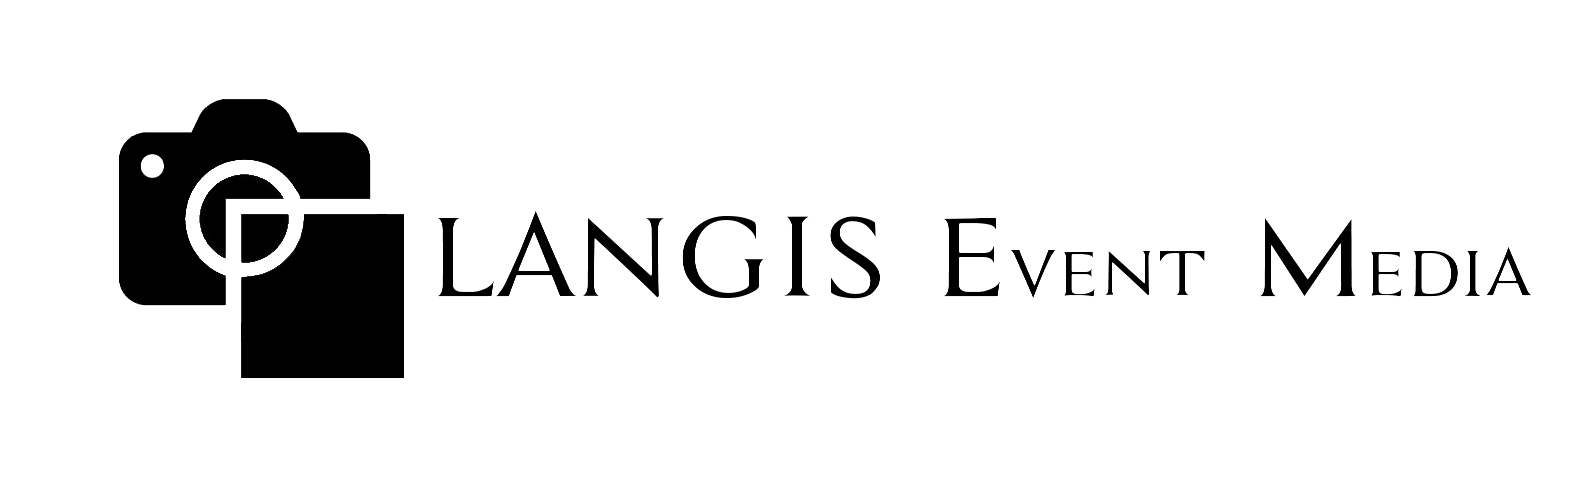 Langis Event Media Logo